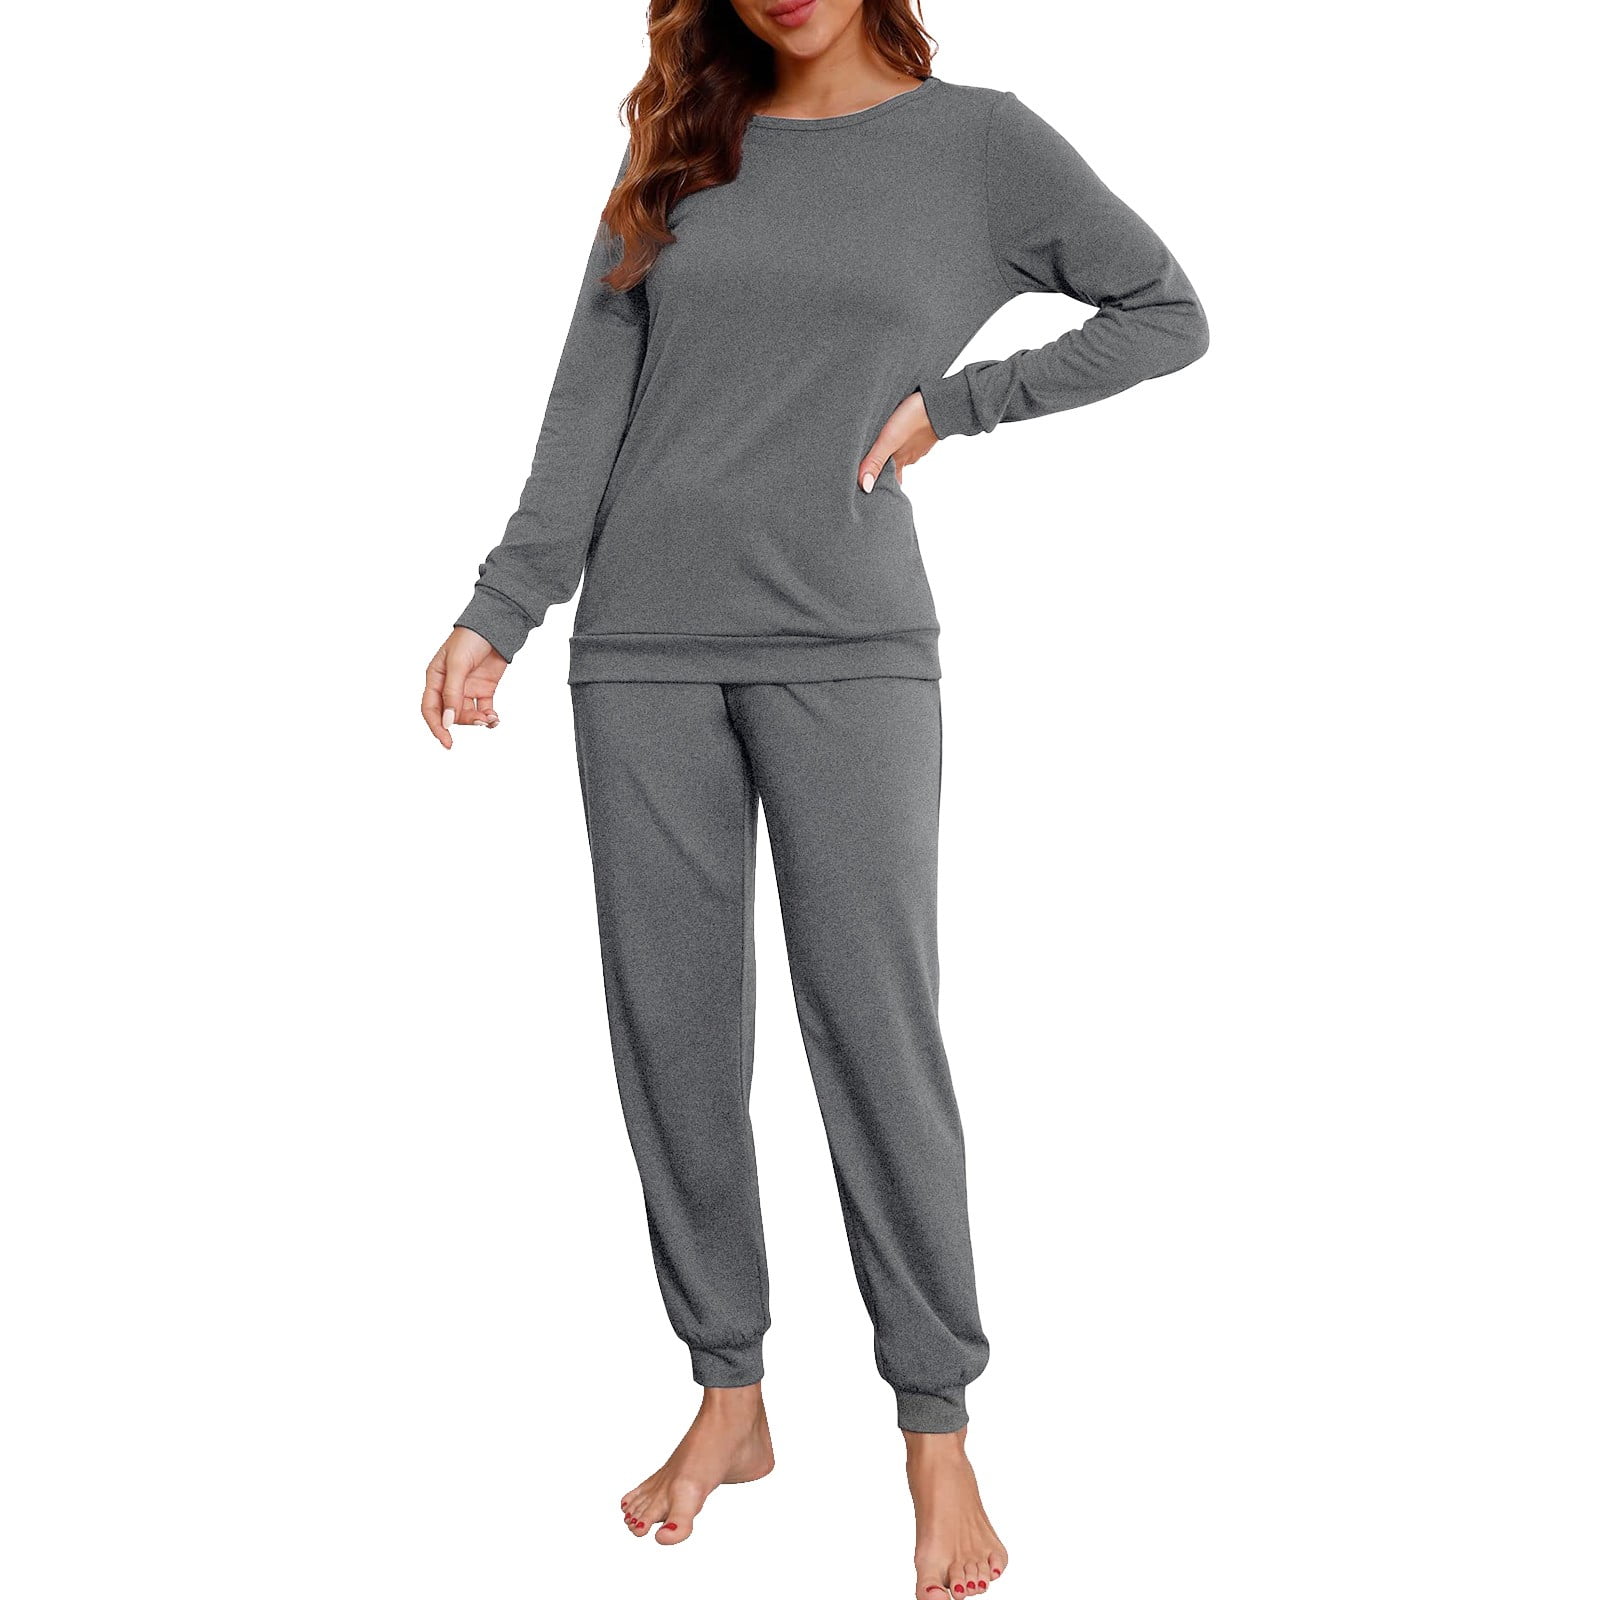 Bow Striped Print Pajamas Set, Casual Short Sleeve Lace Trim Top & Loose  Long Pants, Women's Loungewear & Sleepwear